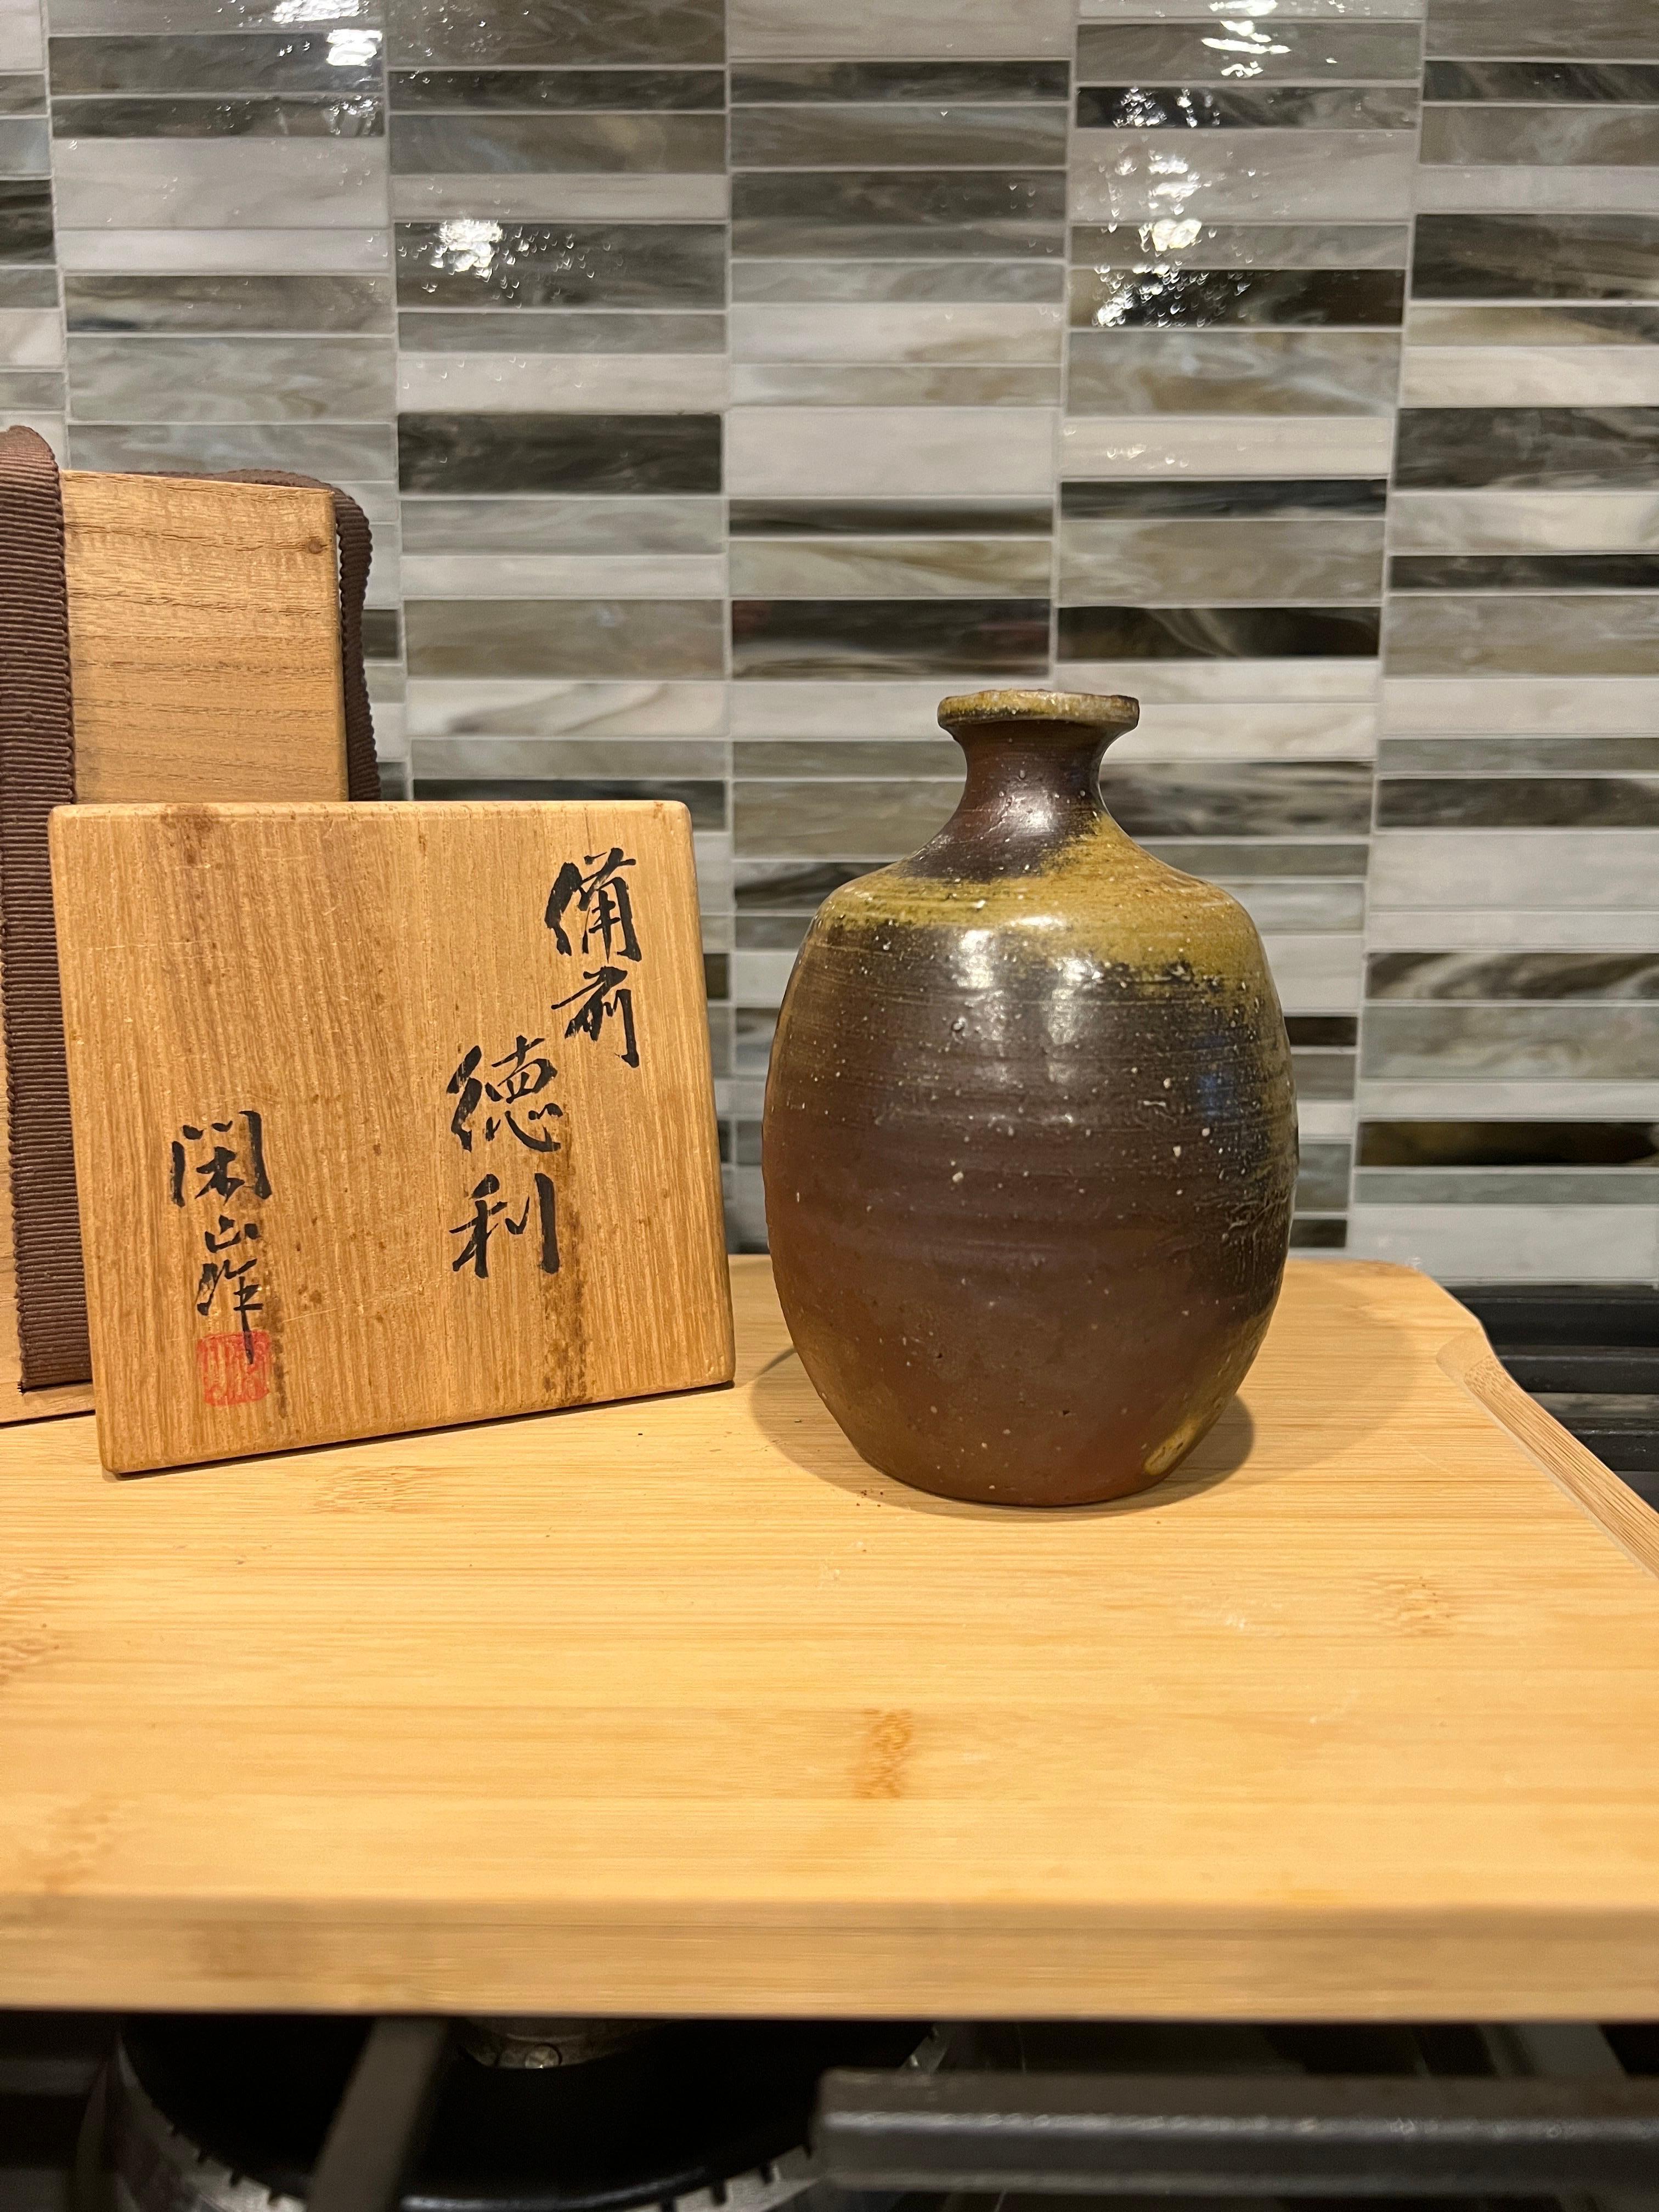 Takatori Family (Japanese, 20th century).

A bizen ware or Bizen yaki pottery vessel produced in the Okayama region of Japan. Housed inside the original wood box. 

Vessel measures: 5.25